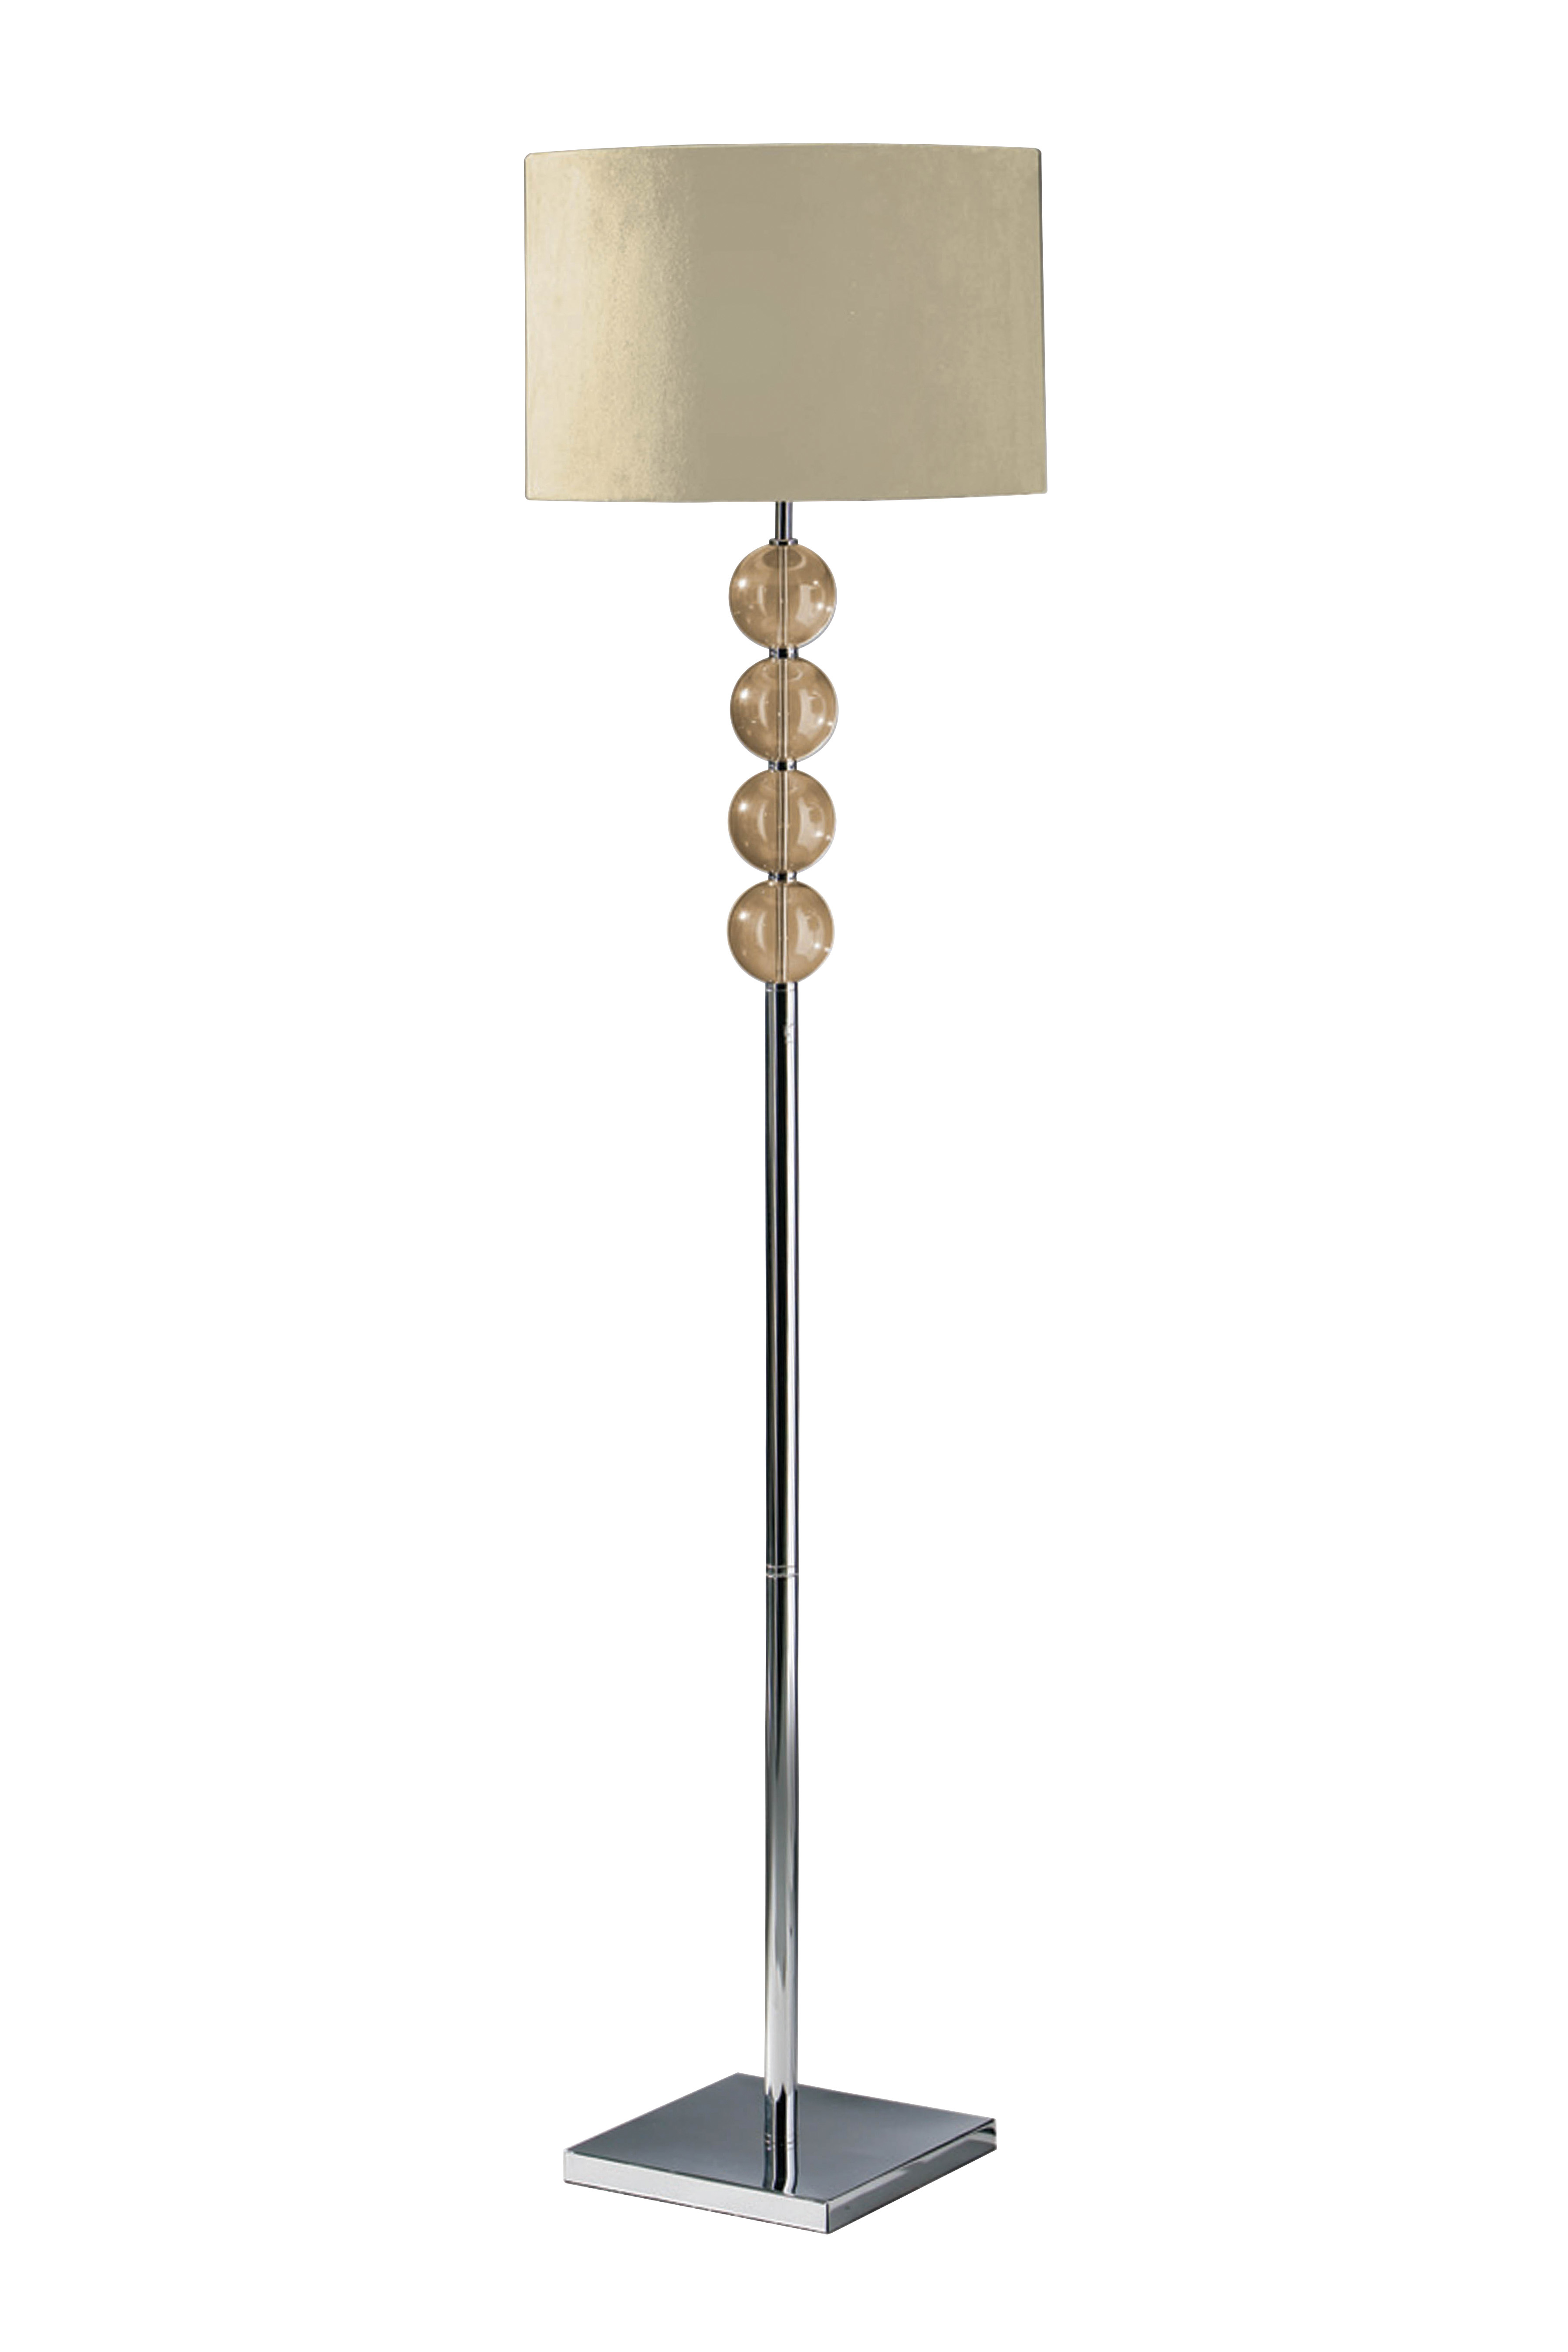 Mistro Floor Lamp With Eu Plug inside dimensions 3600 X 5400